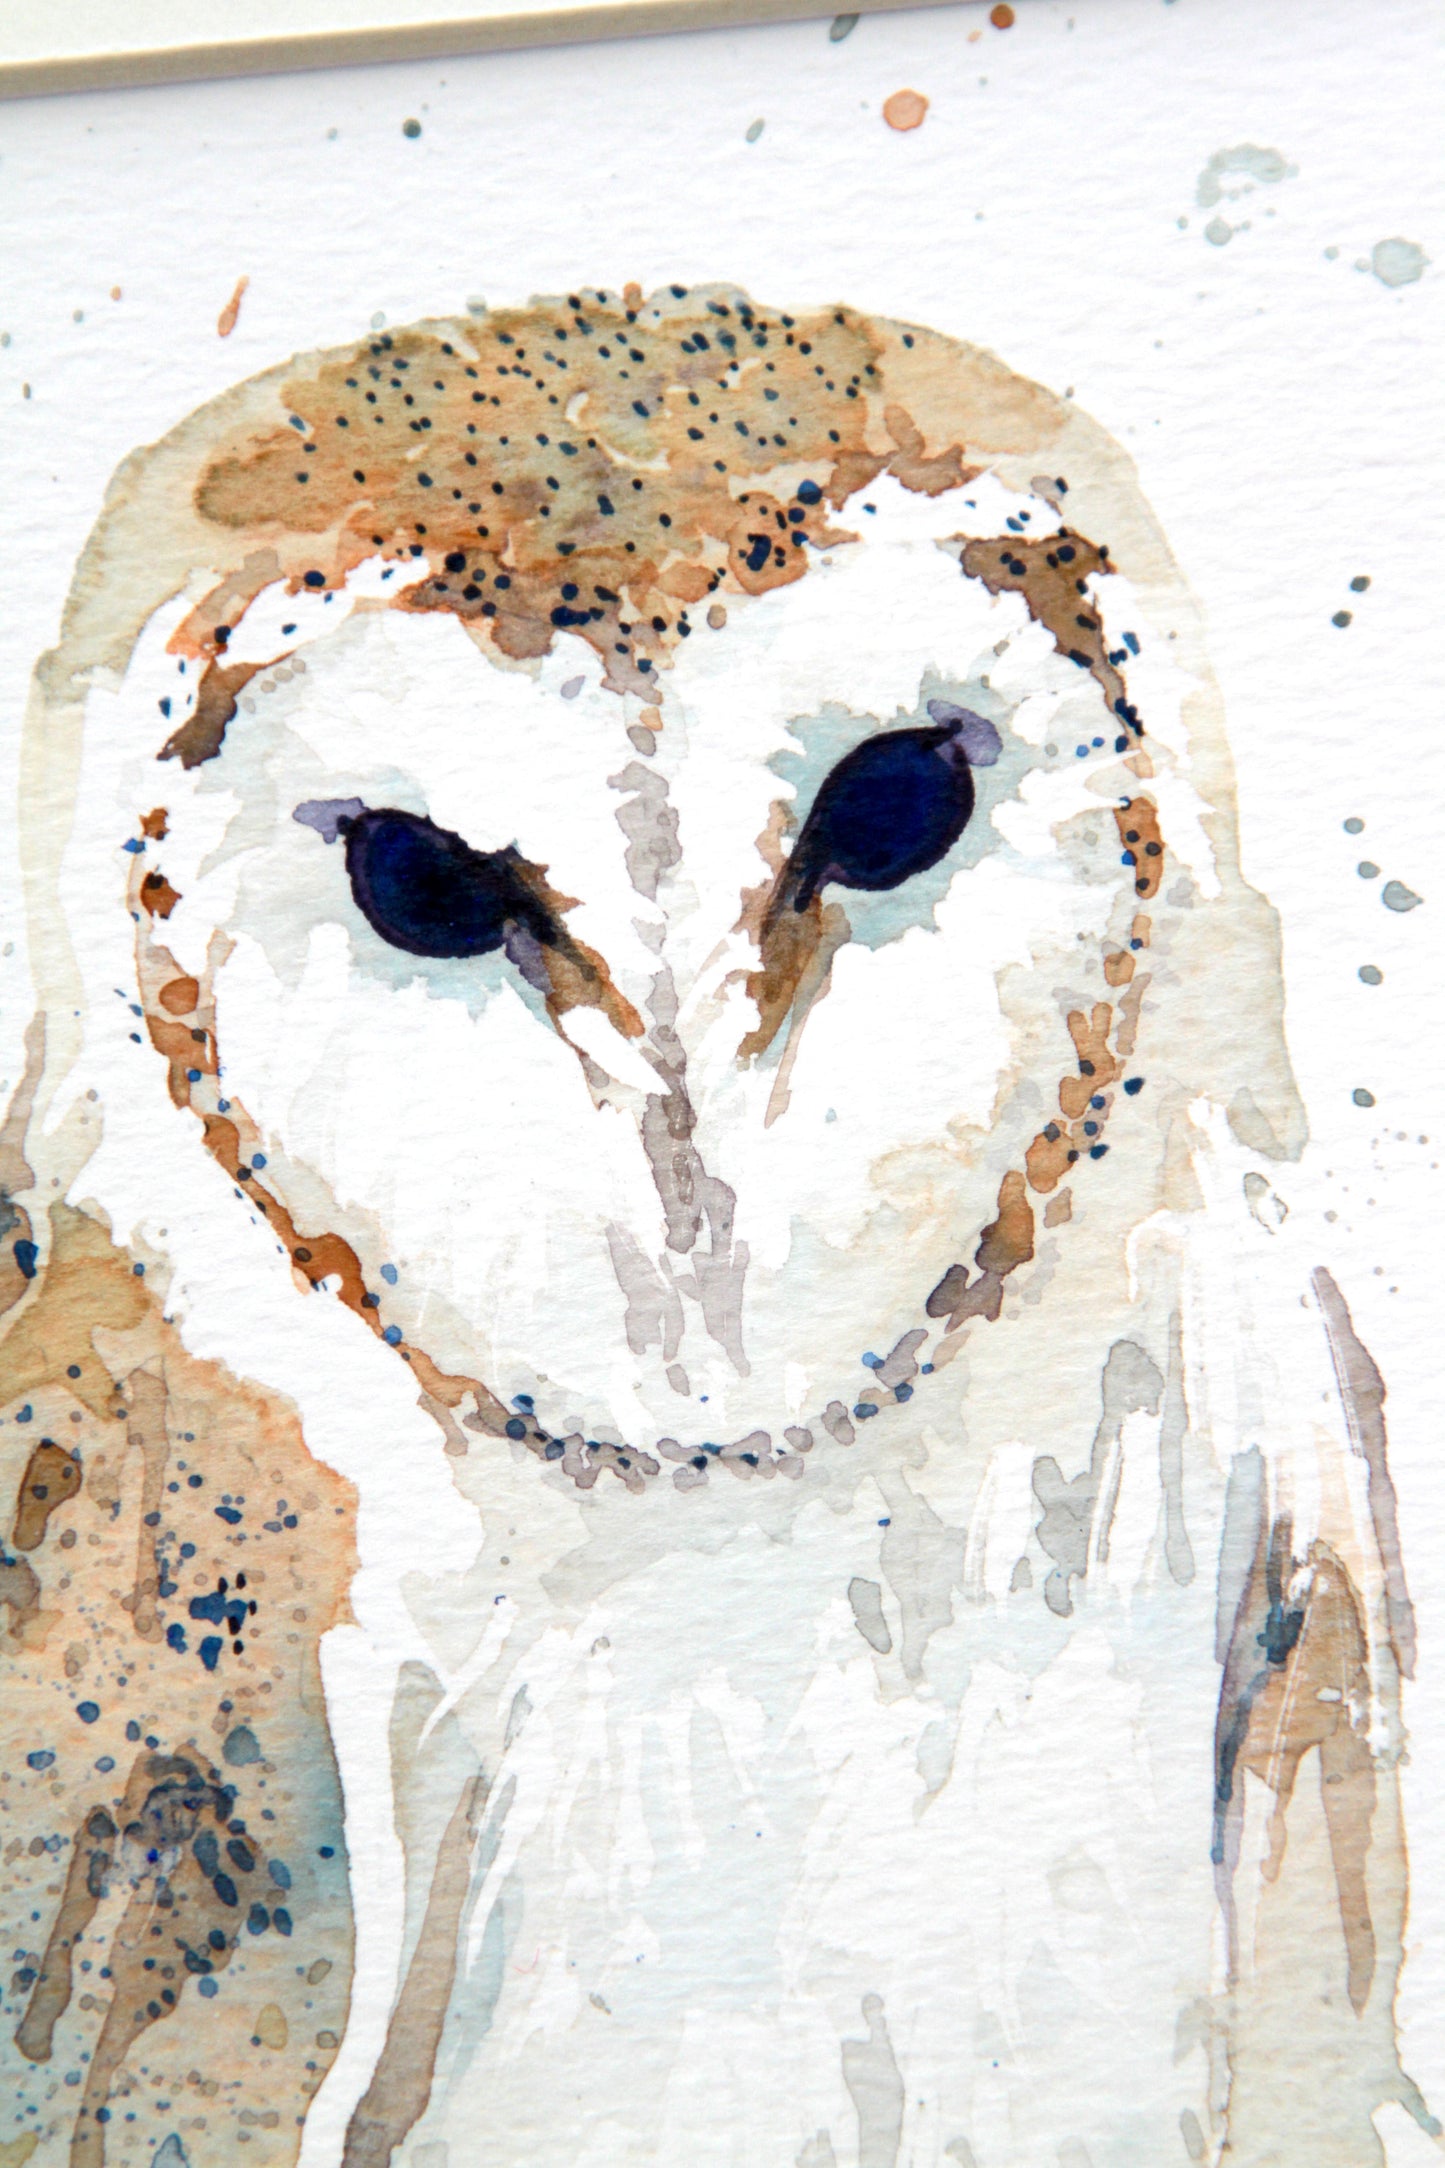 BARN OWL #2 watercolour painting